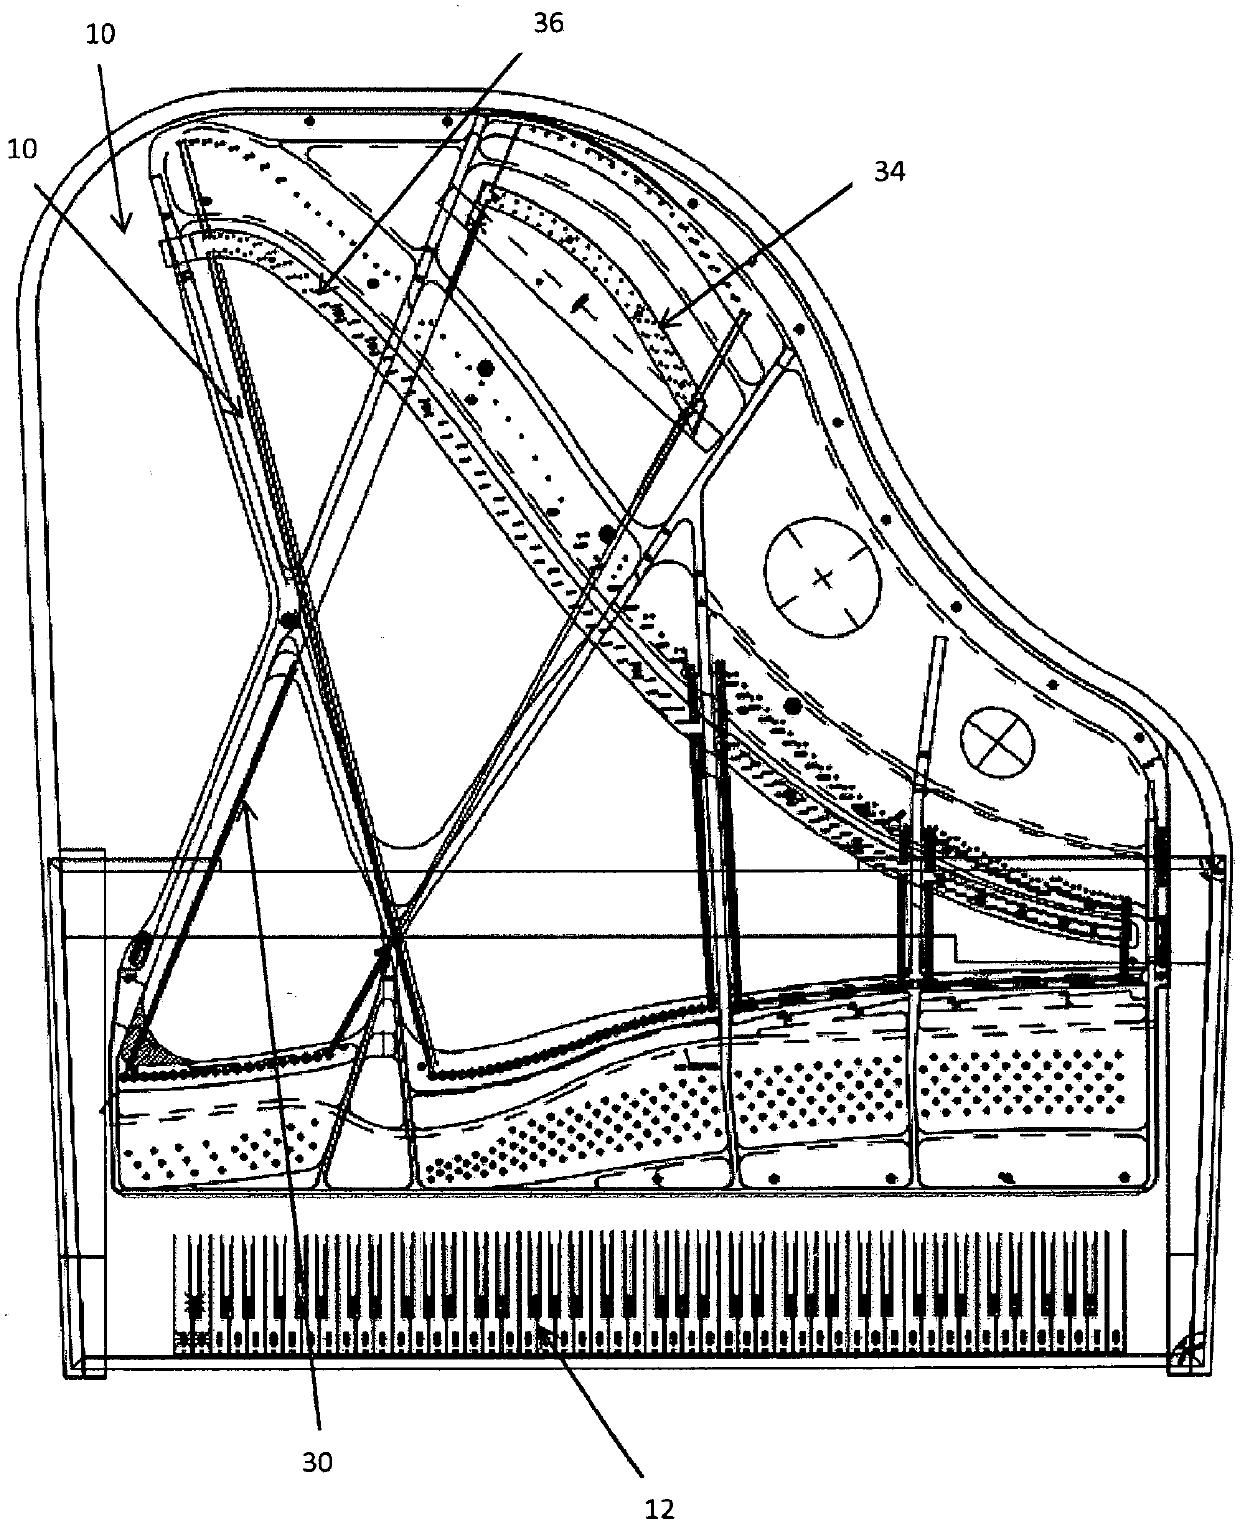 Keyboard instrument